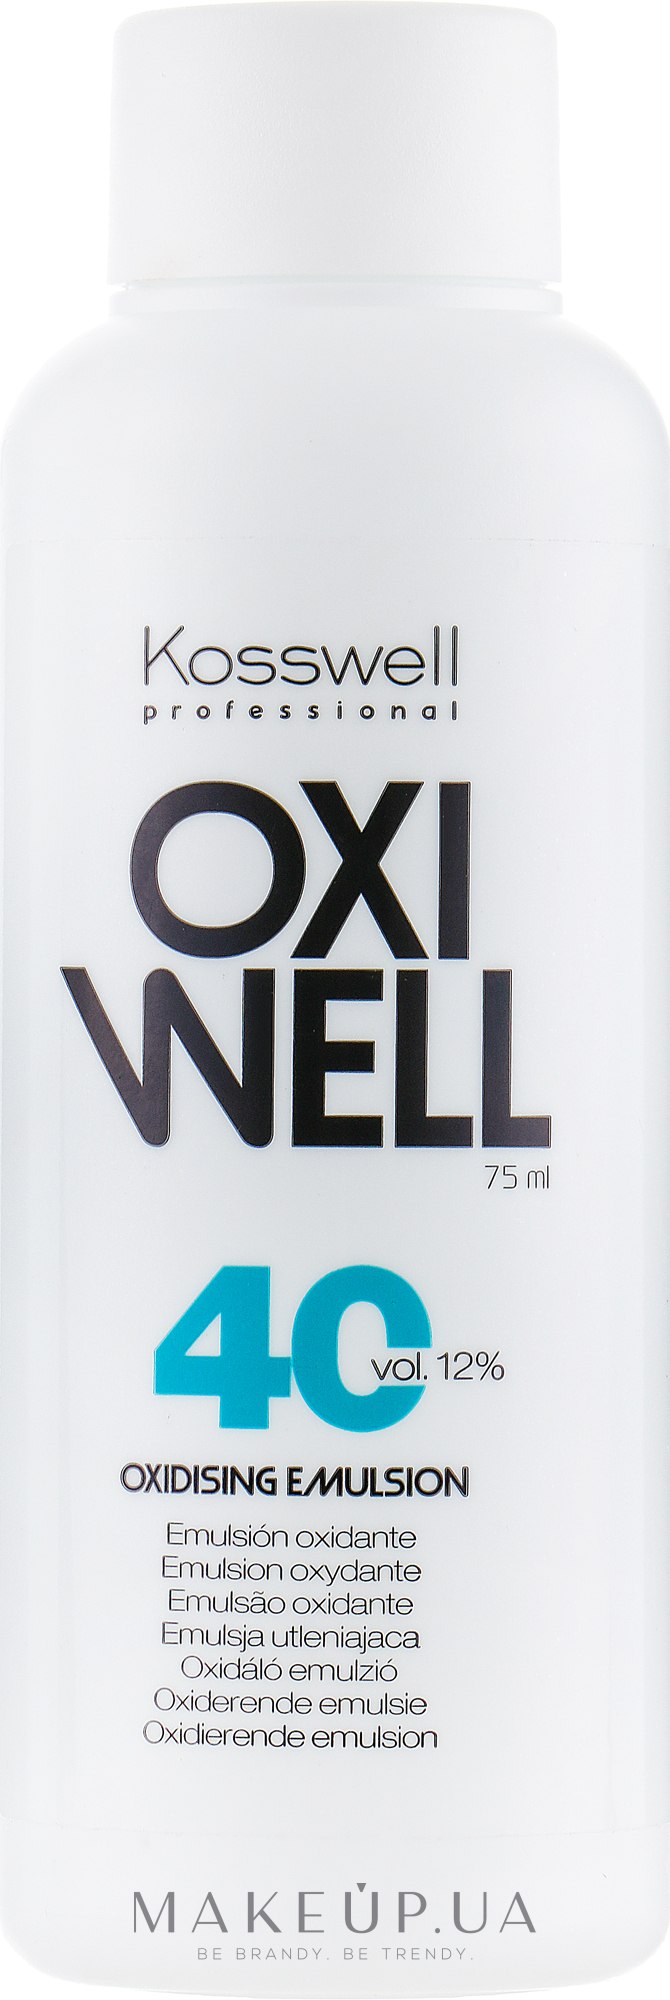 Окислювальна емульсія, 12% - Kosswell Equium Oxidizing Emulsion Oxiwell 12% 40 vol — фото 75ml